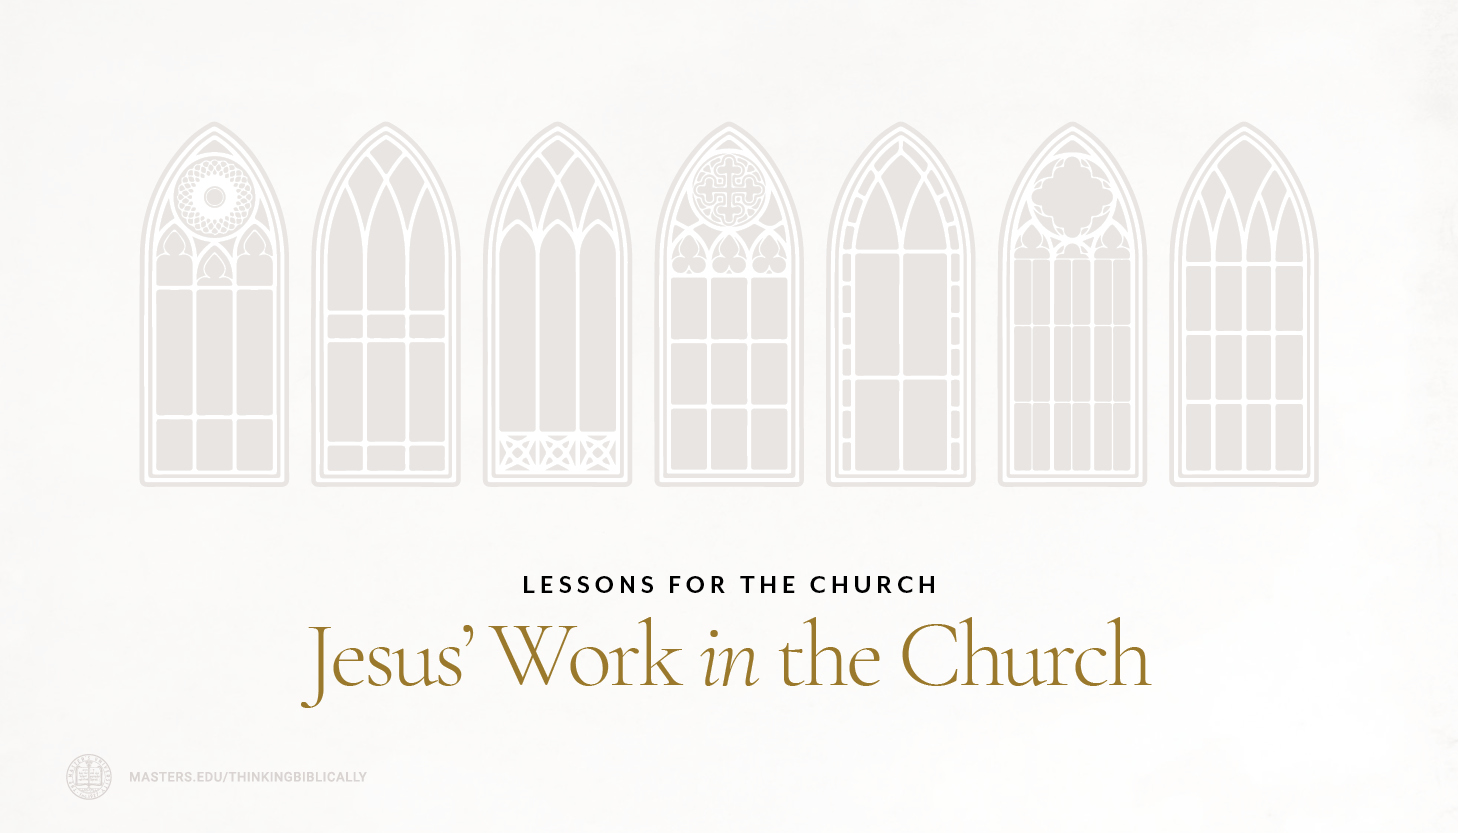 Jesus’ Work in the Church